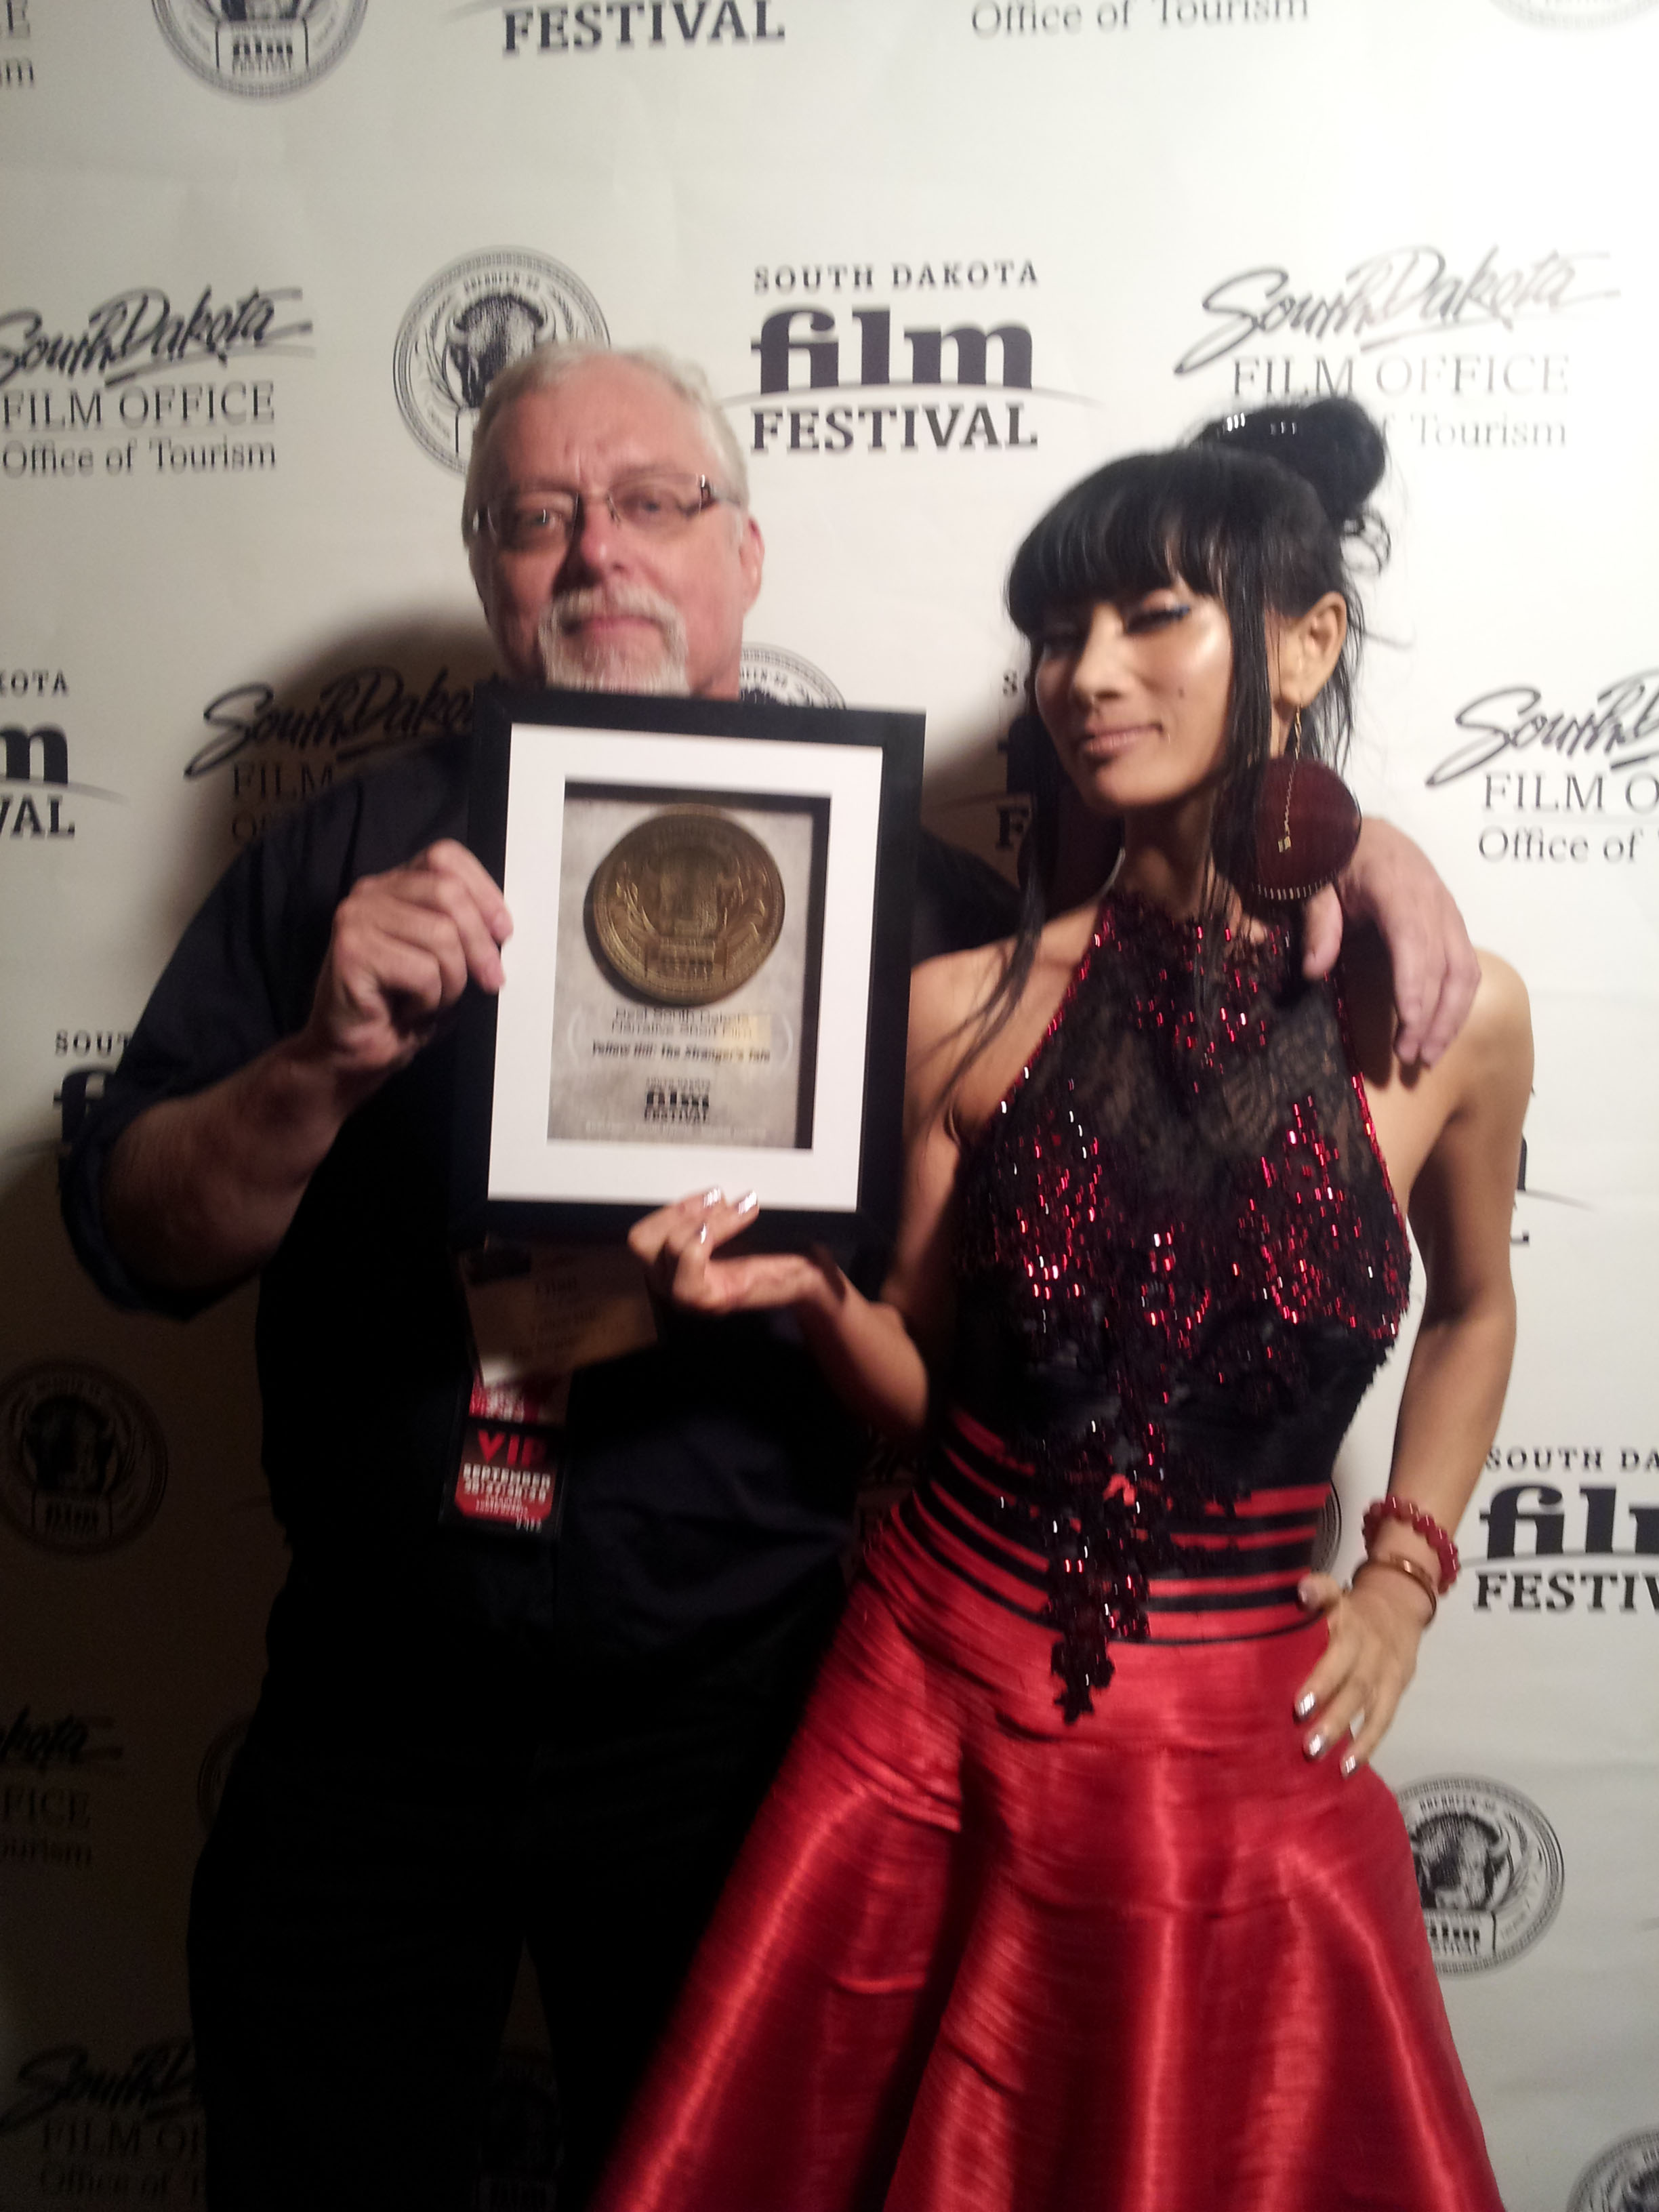 Best Short Narrative Film, South Dakota Film Festival with Bai Ling.